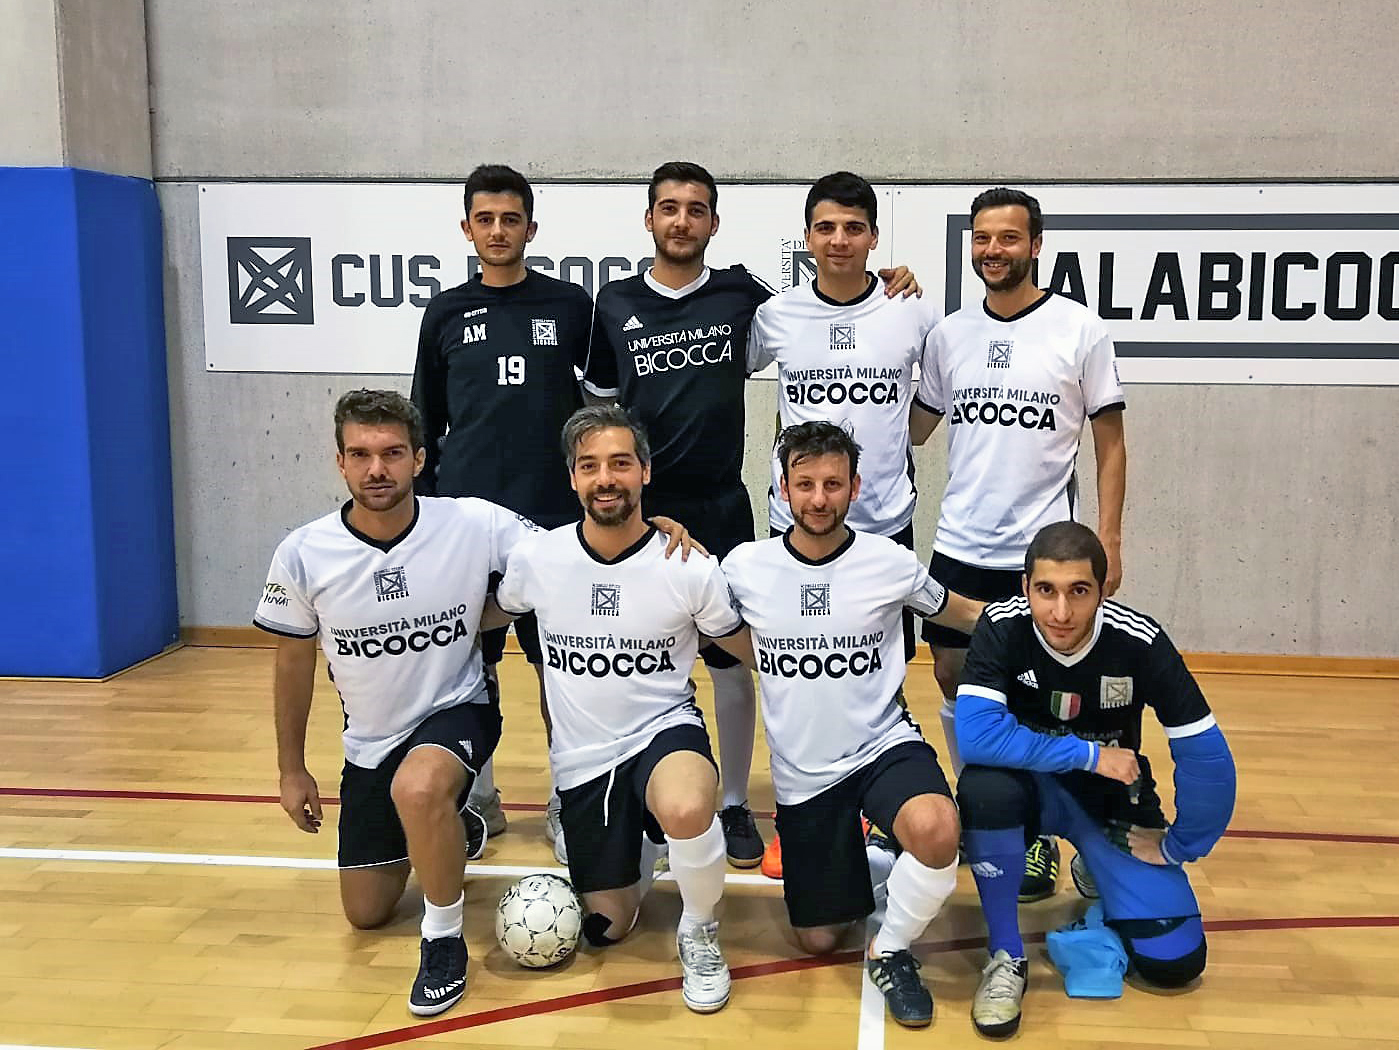 Calcio a 5 maschile federale 2018/19 - CUS Bicocca